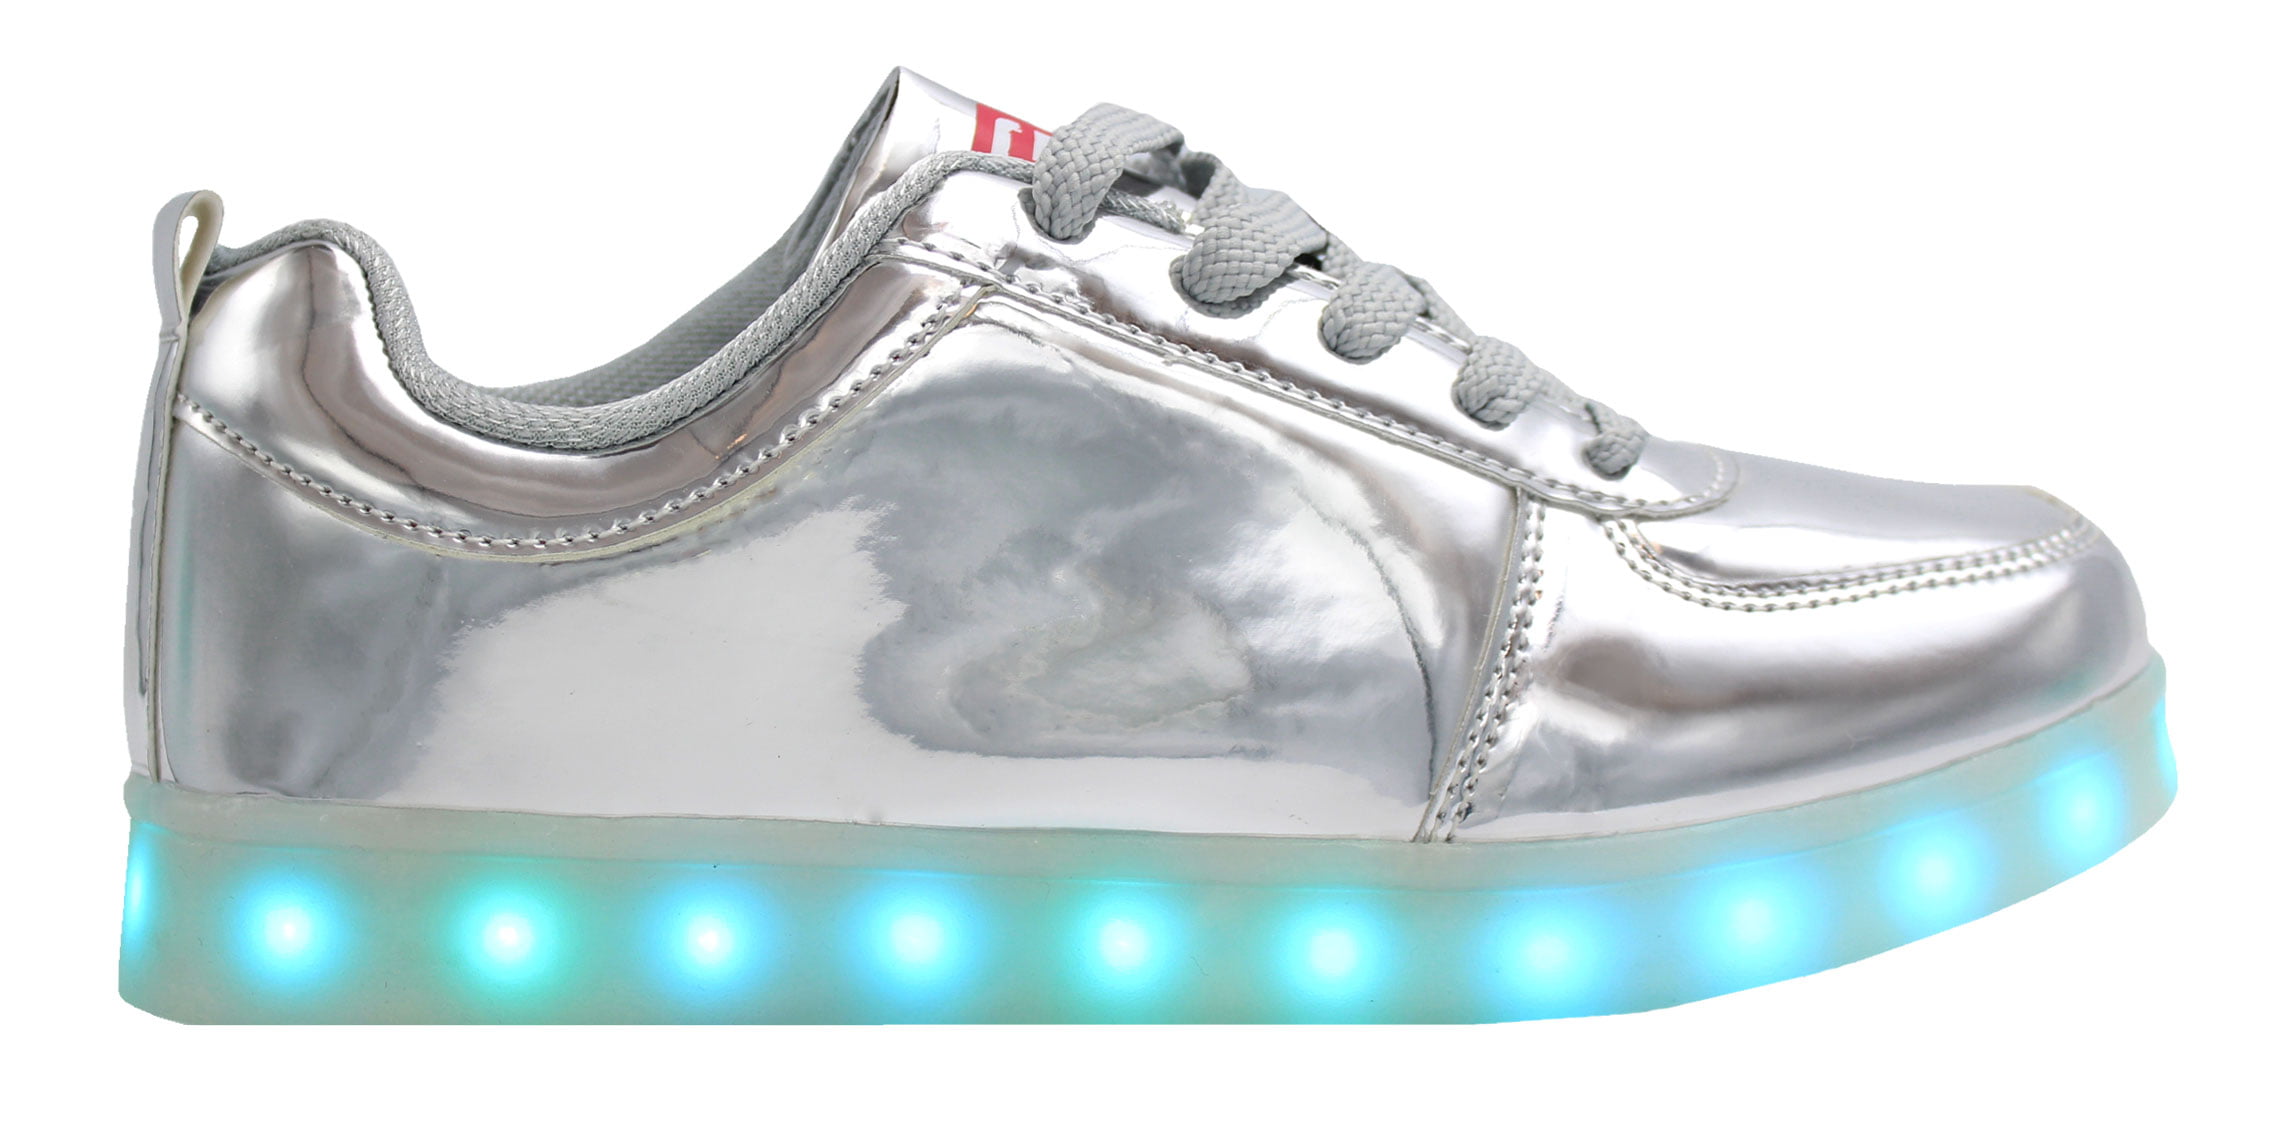 walmart led light up shoes